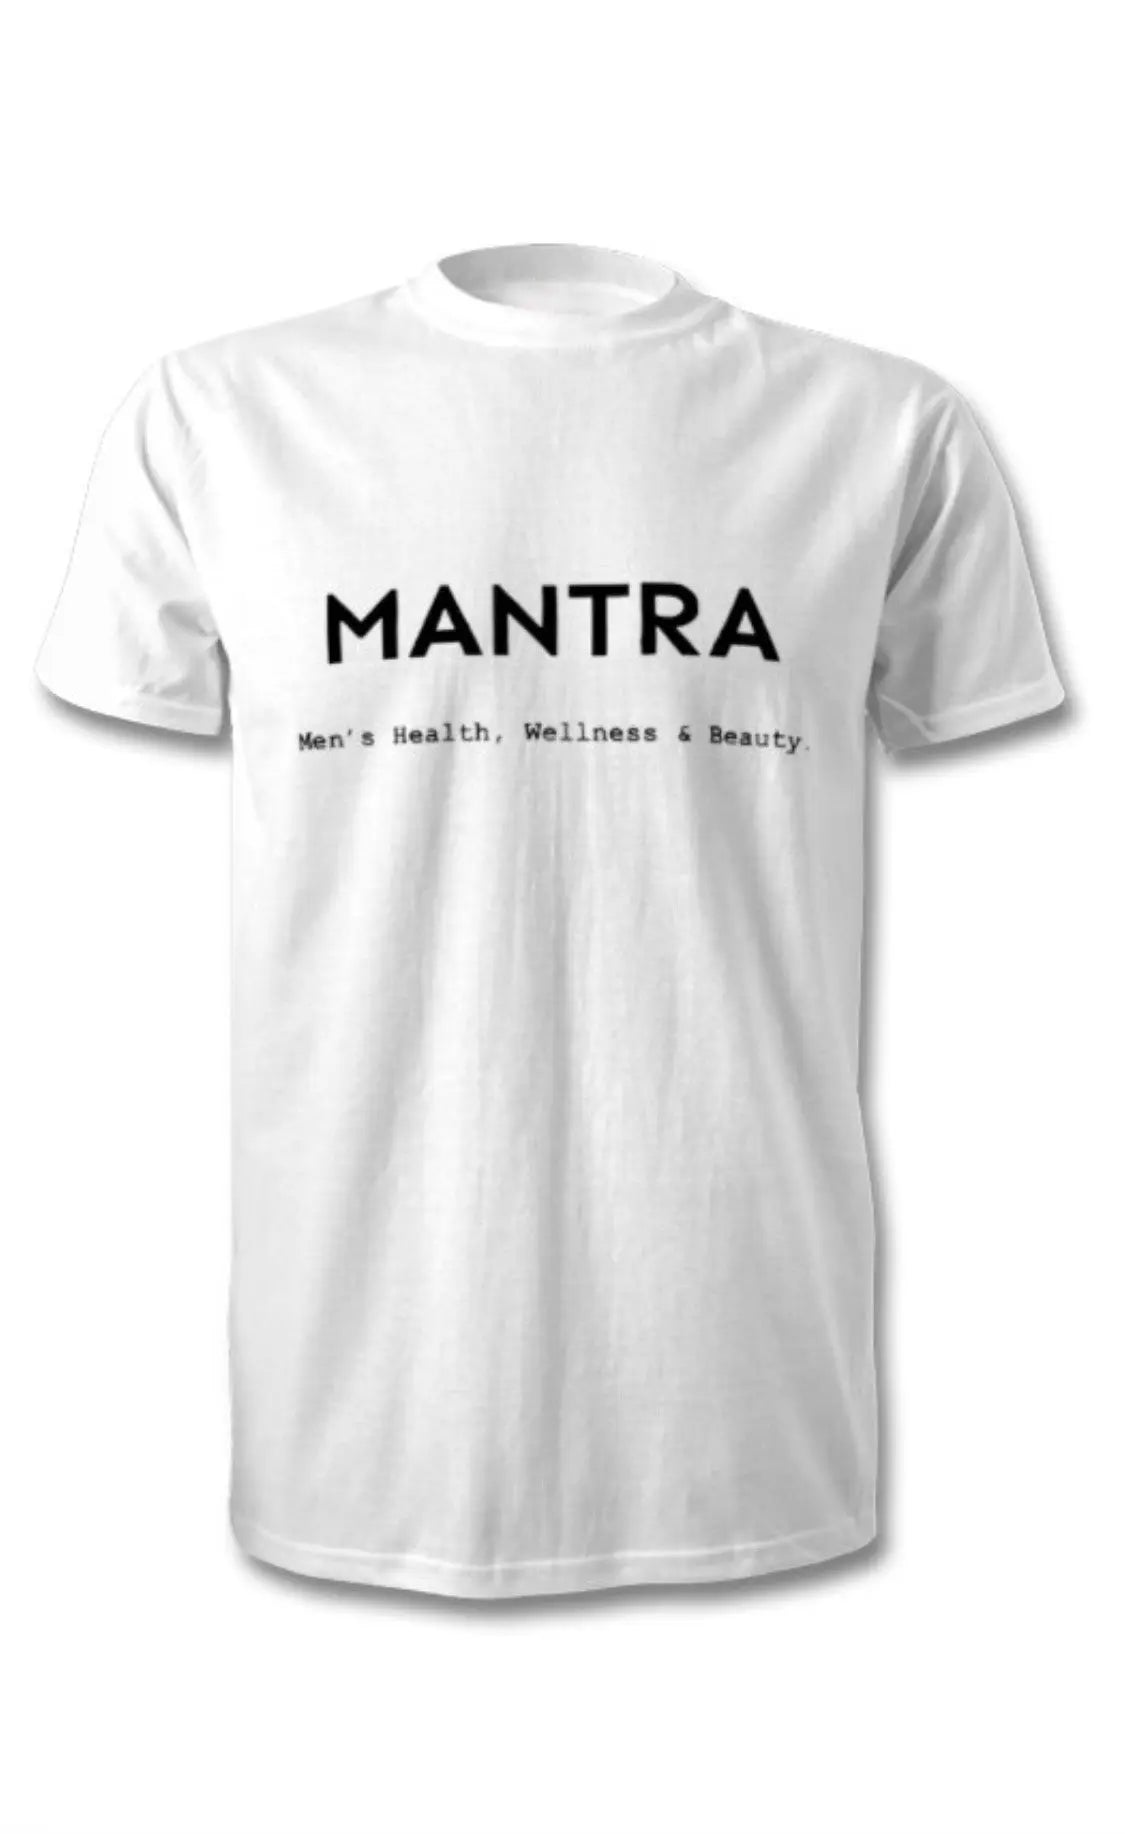 Mantra Tee - Image #1